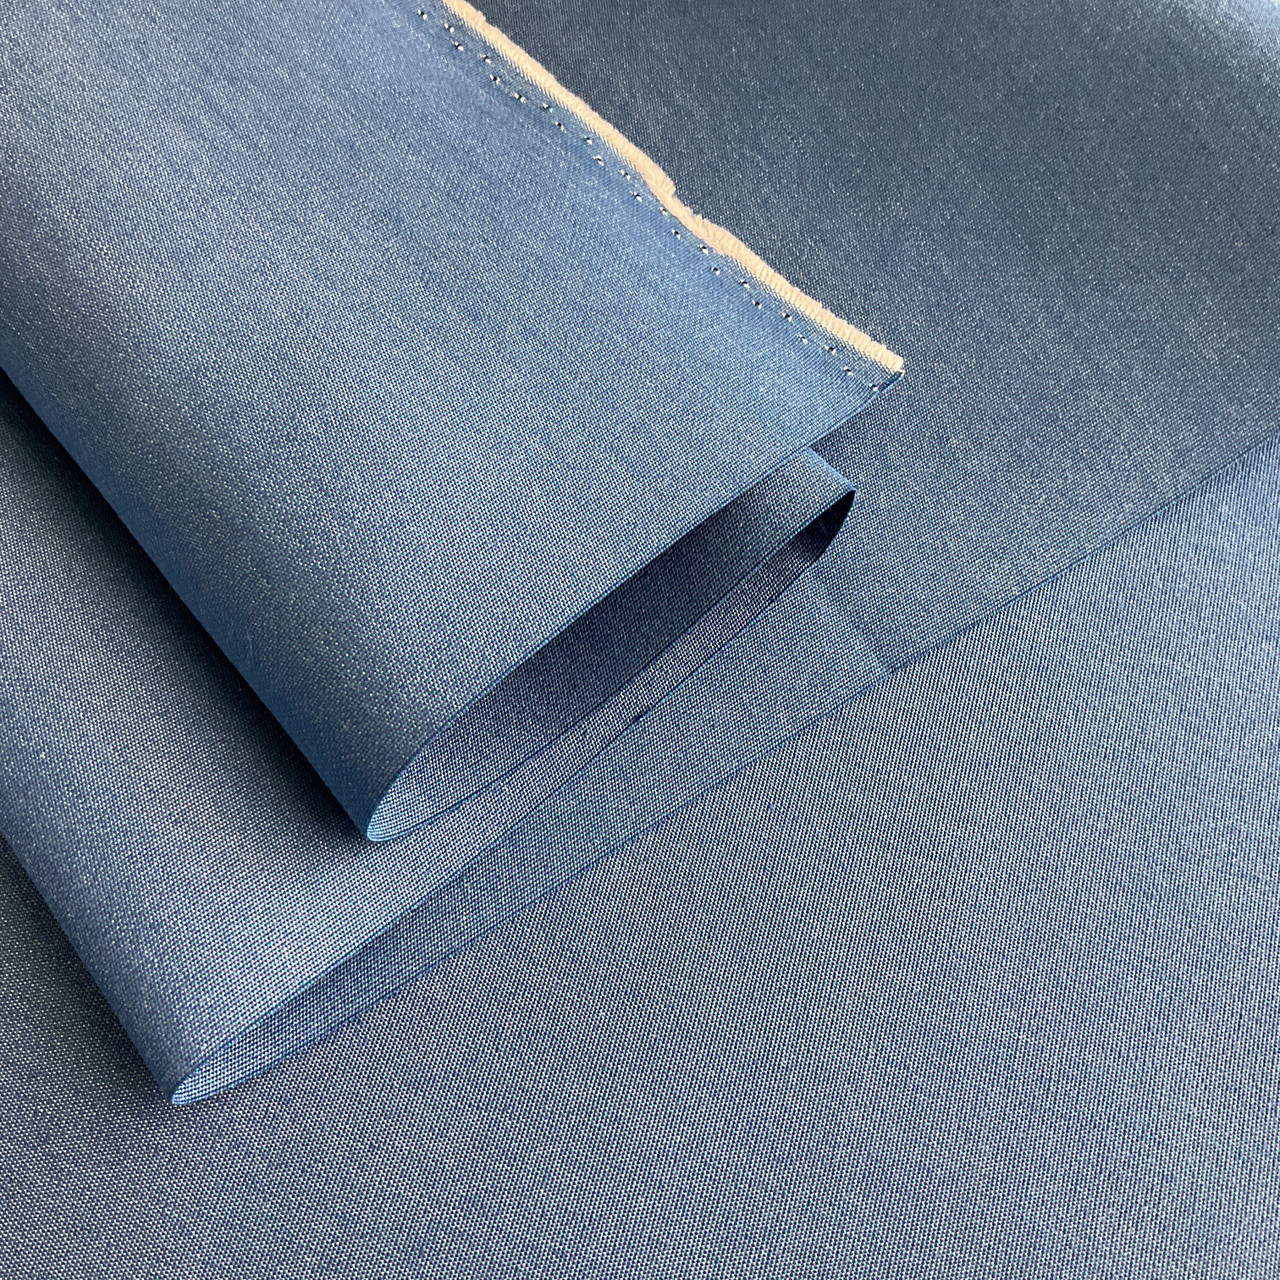 Sunbrella Fabric 54 Upholstery Cast Petal 40431, by the yard